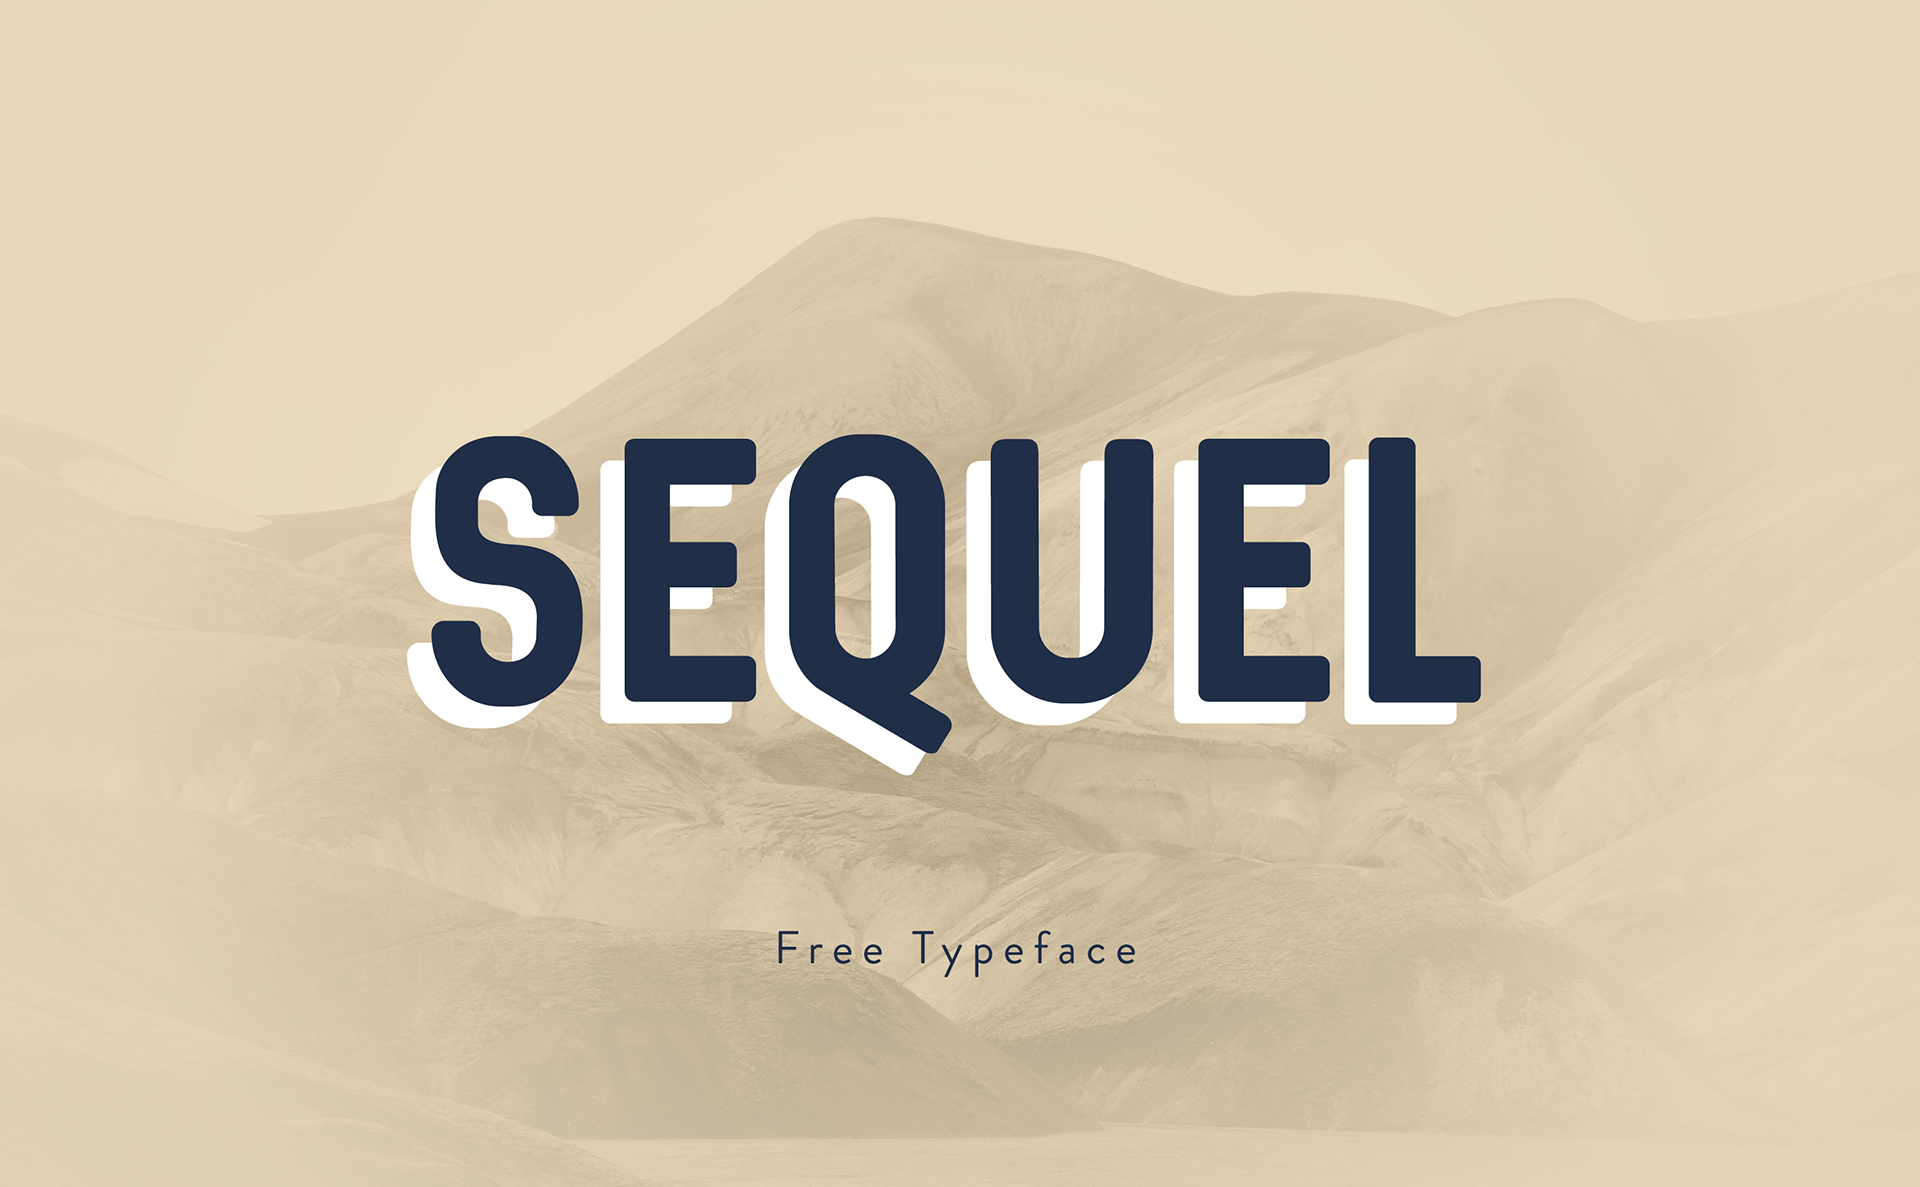 Sequel free font